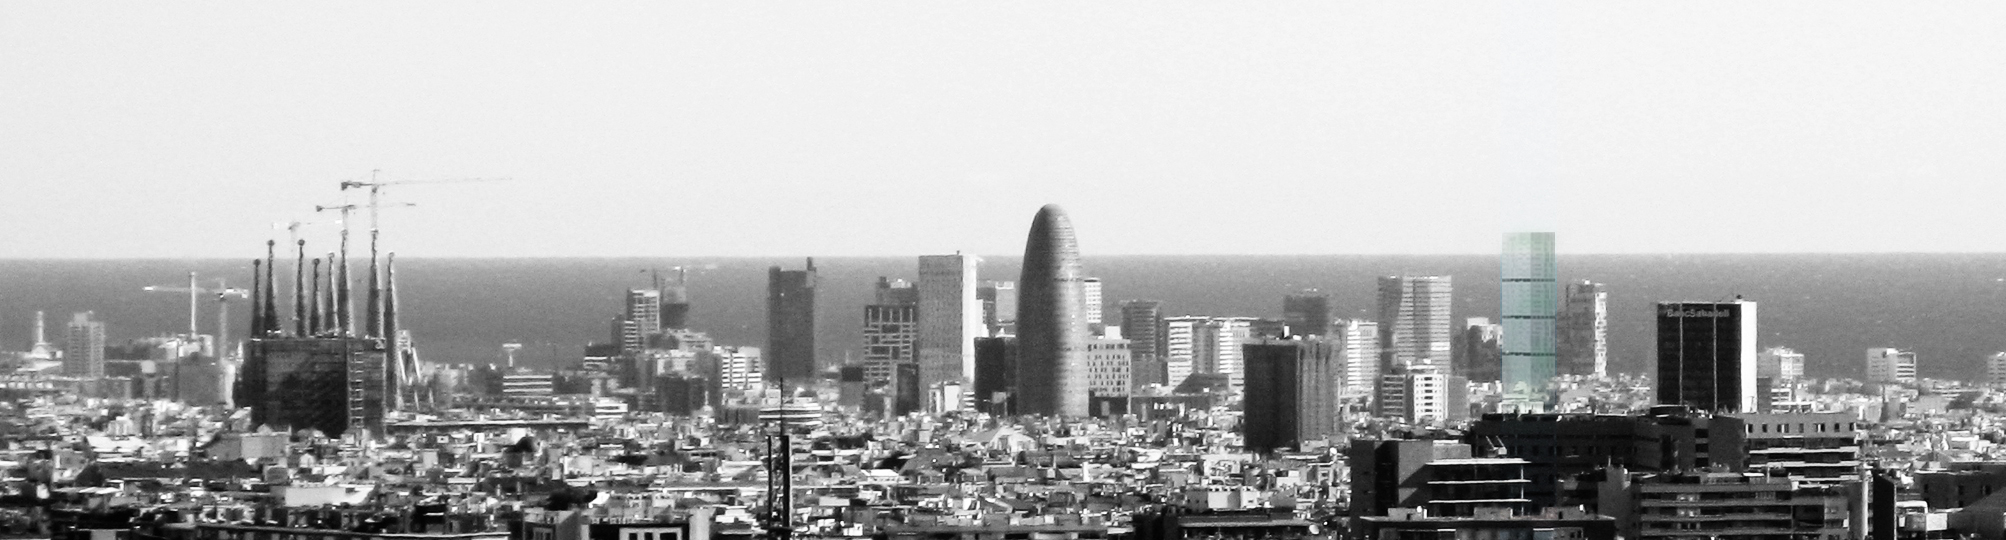 torre-cerda-com-skyline-barcelone.jpg